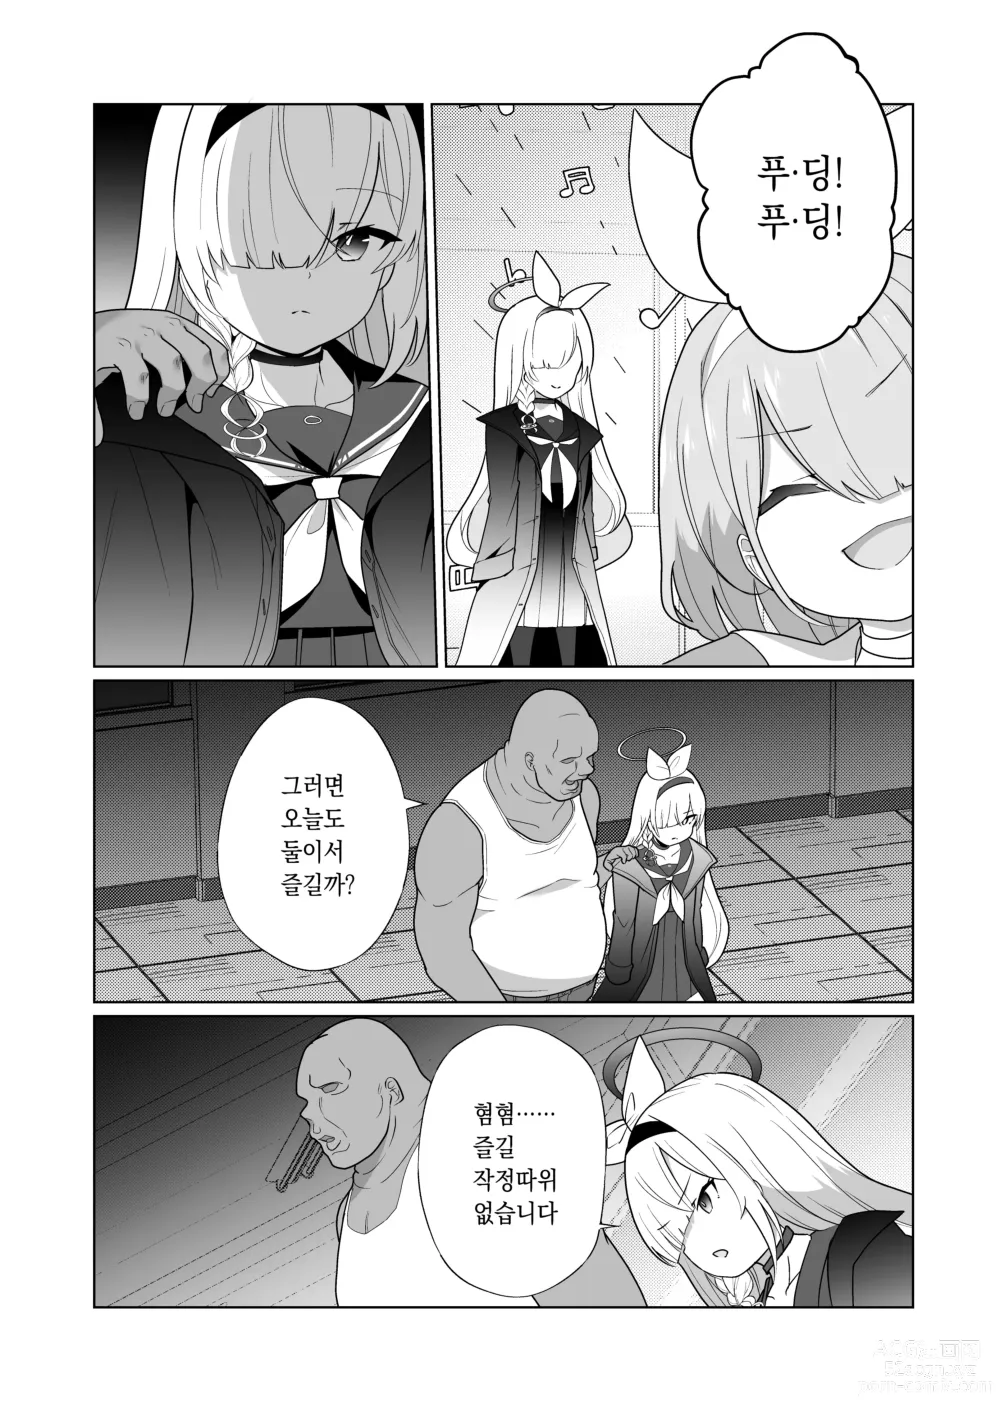 Page 34 of doujinshi 싫어하는 프라나가 기꺼이 봉사하는 이야기